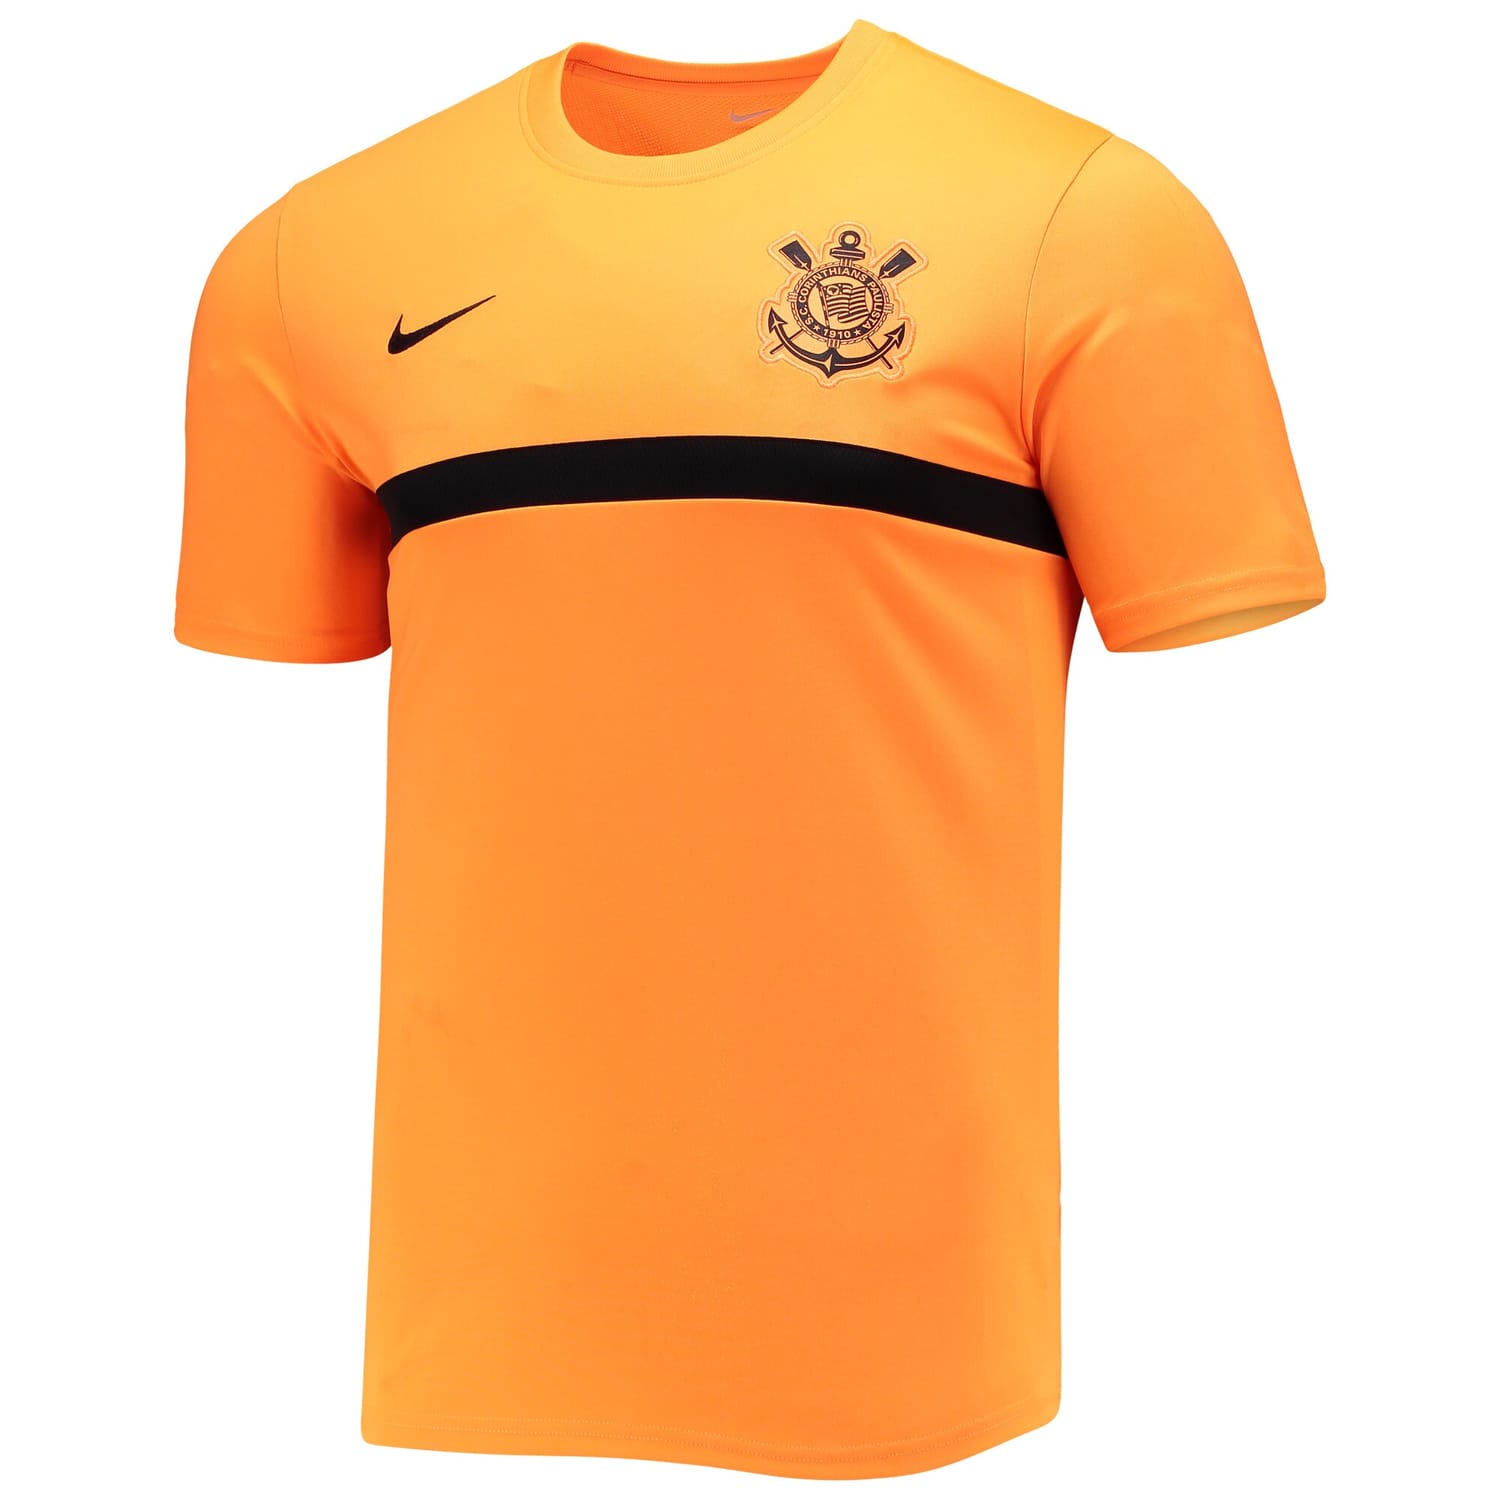 Campeonato Brasileiro Serie A Corinthians Pro Jersey Shirt Orange for Men